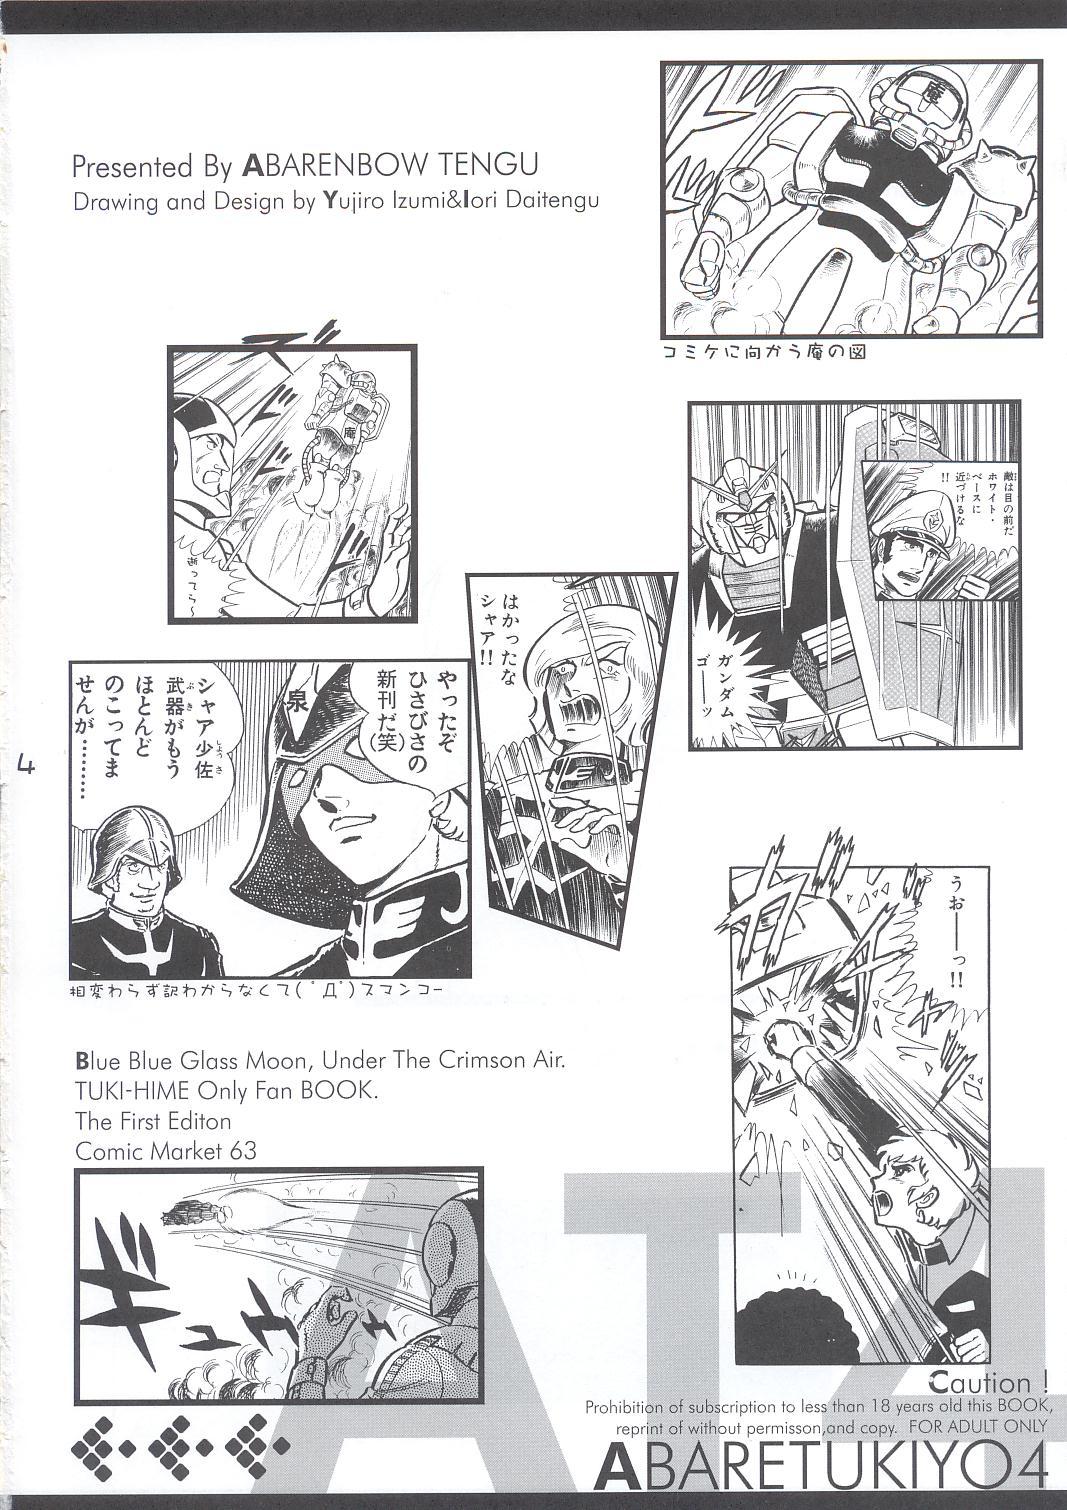 Cogiendo ABARETSUKIYO 4 - Tsukihime Full Movie - Page 3